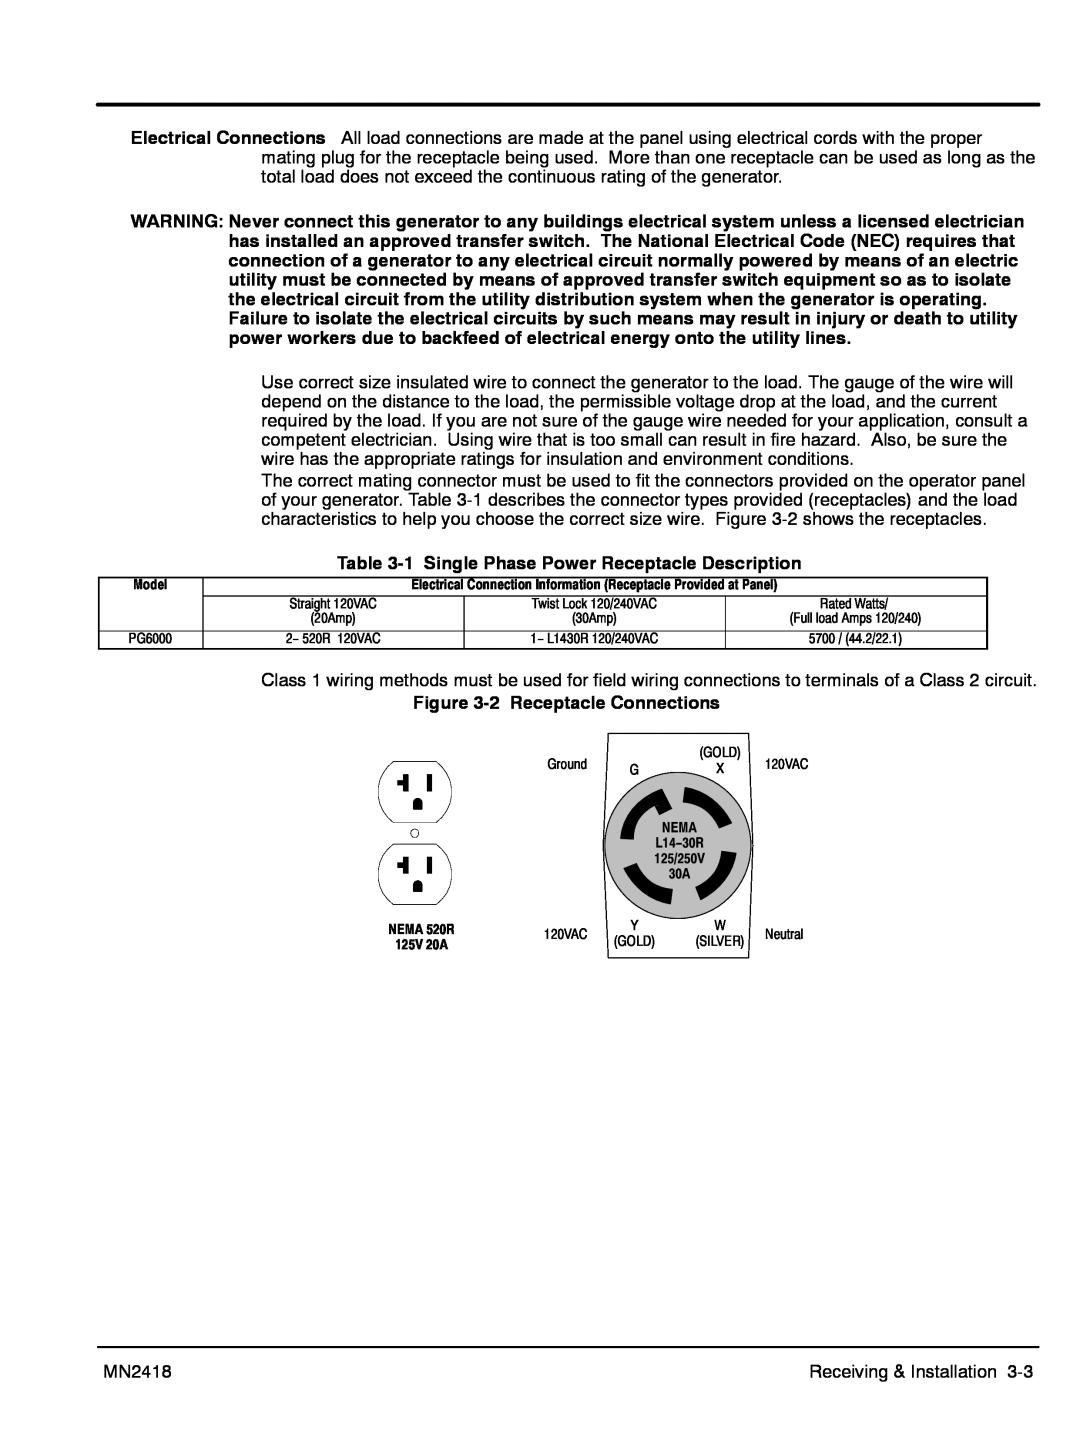 Baldor PG 6000 manual 1Single Phase Power Receptacle Description 